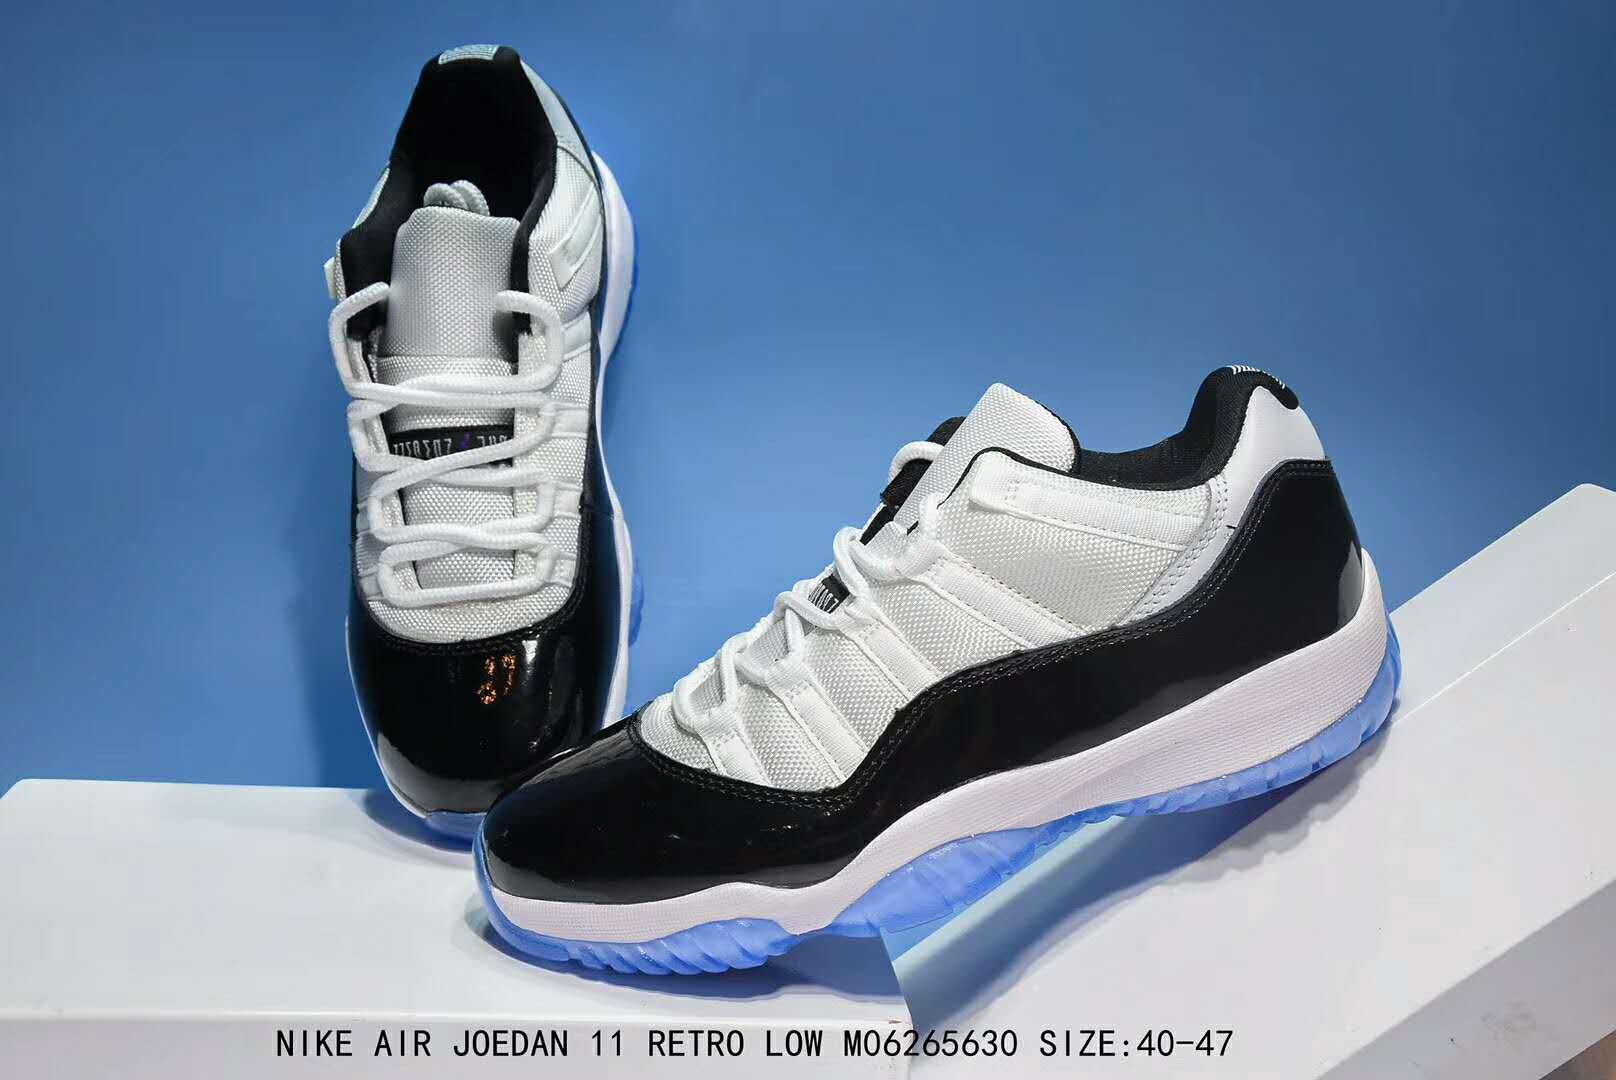 New Jordans 11 Low Suede White Black Blue Sole Basketball Shoes